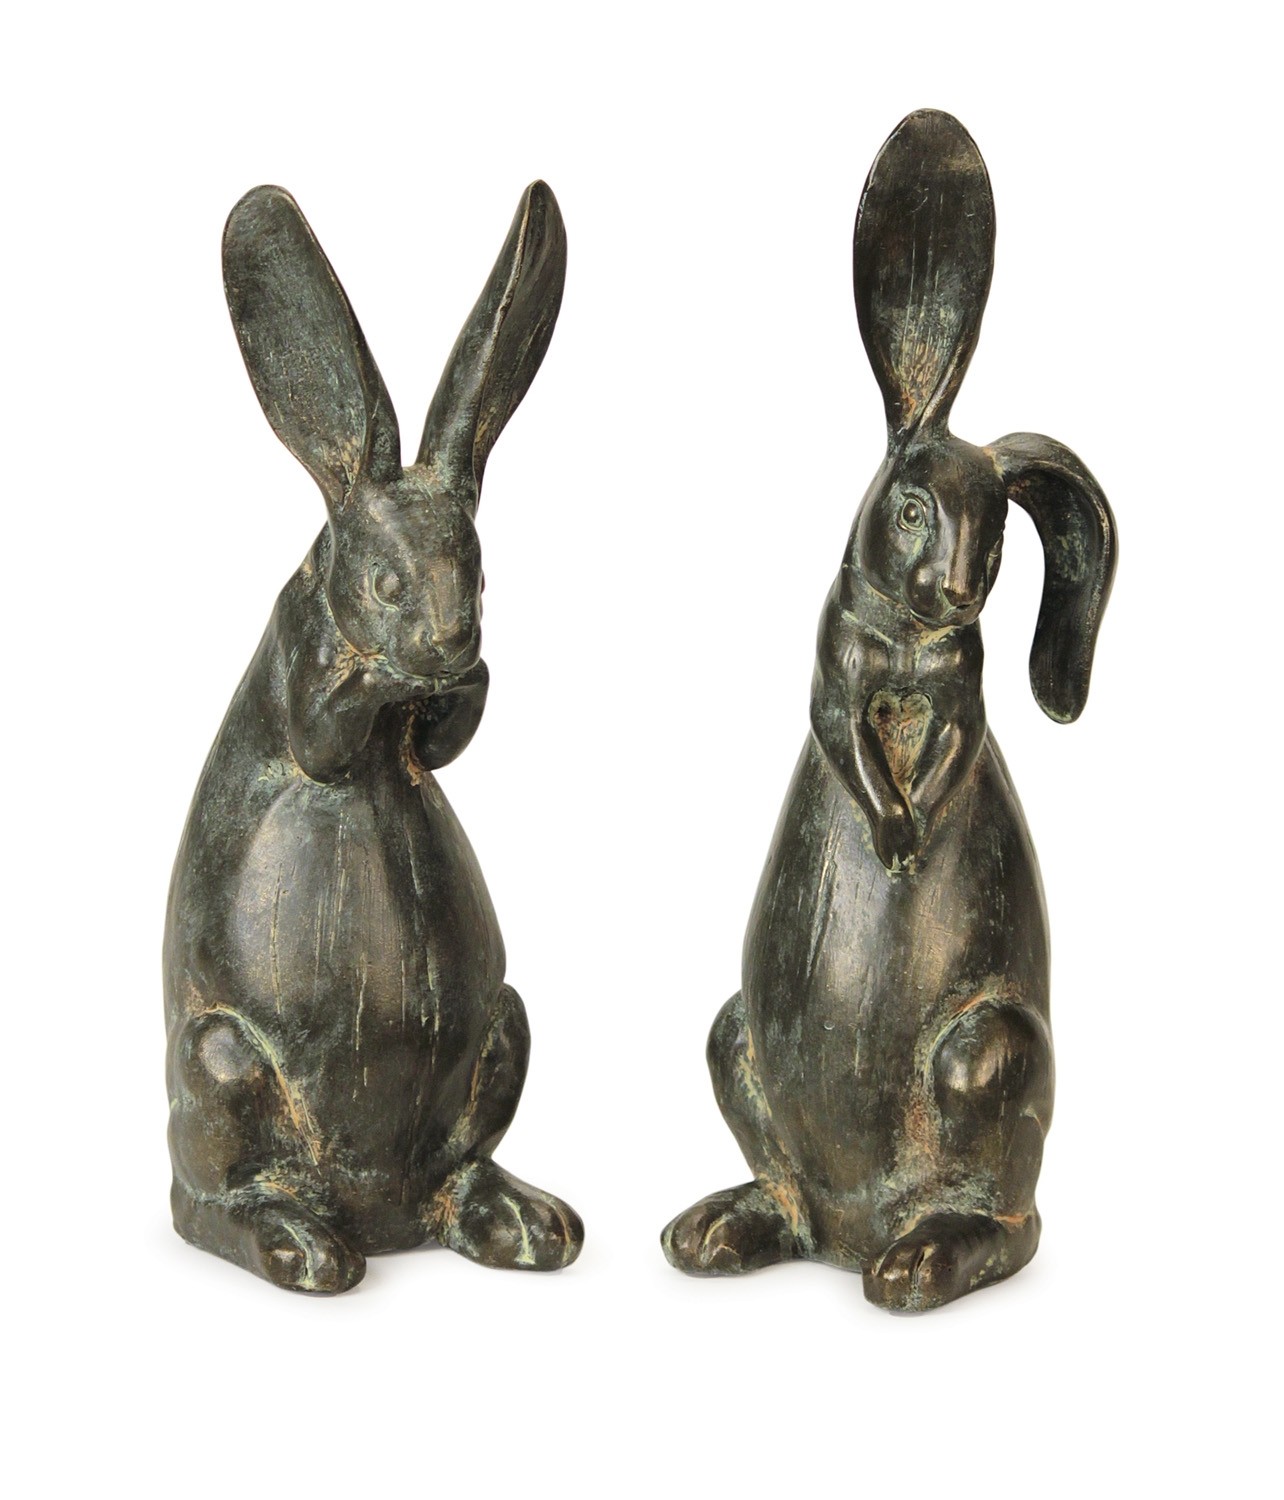 Floppy Eared Rabbits (Set of 2) 16.75"H Polystone